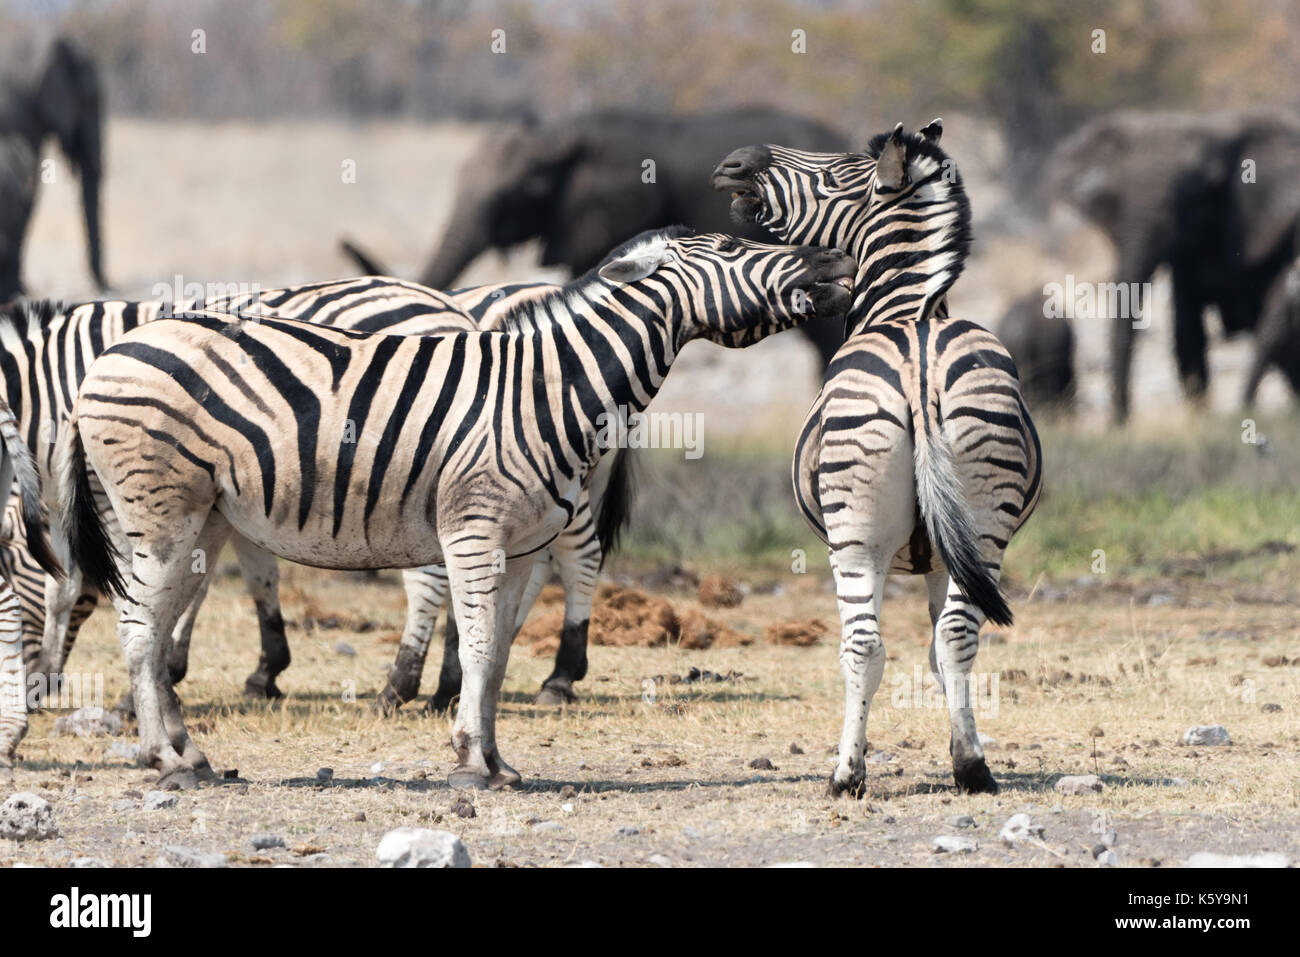 Zebras fighting in Namibia's Etosha National Park Stock Photo